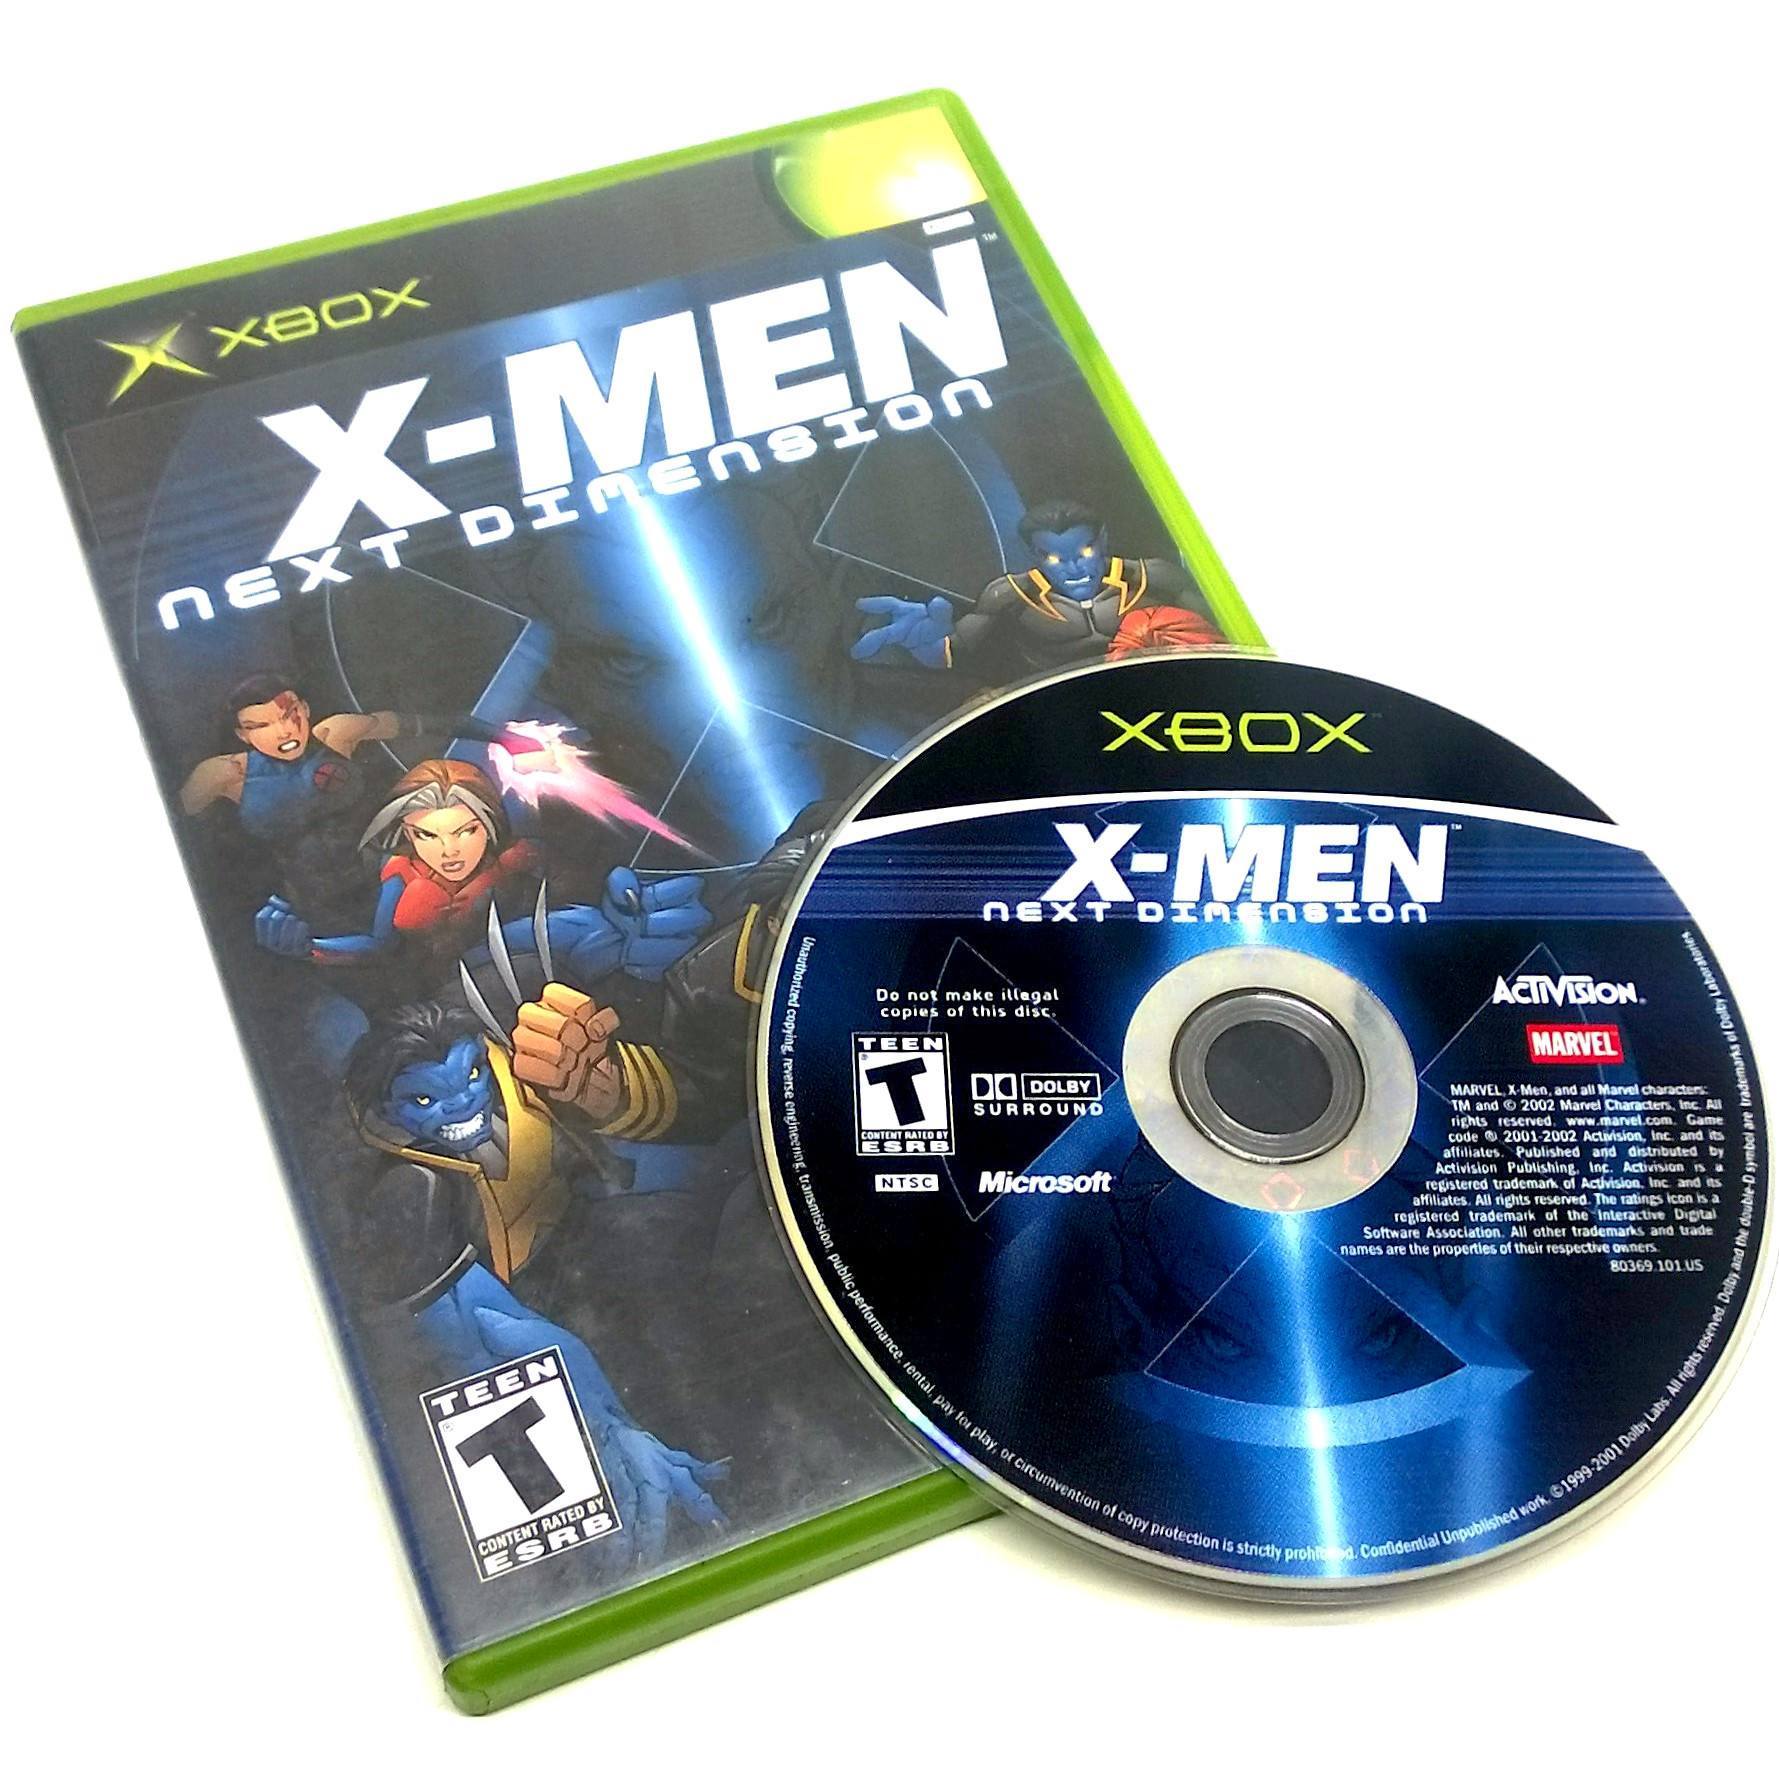 X-Men: Next Dimension for Xbox